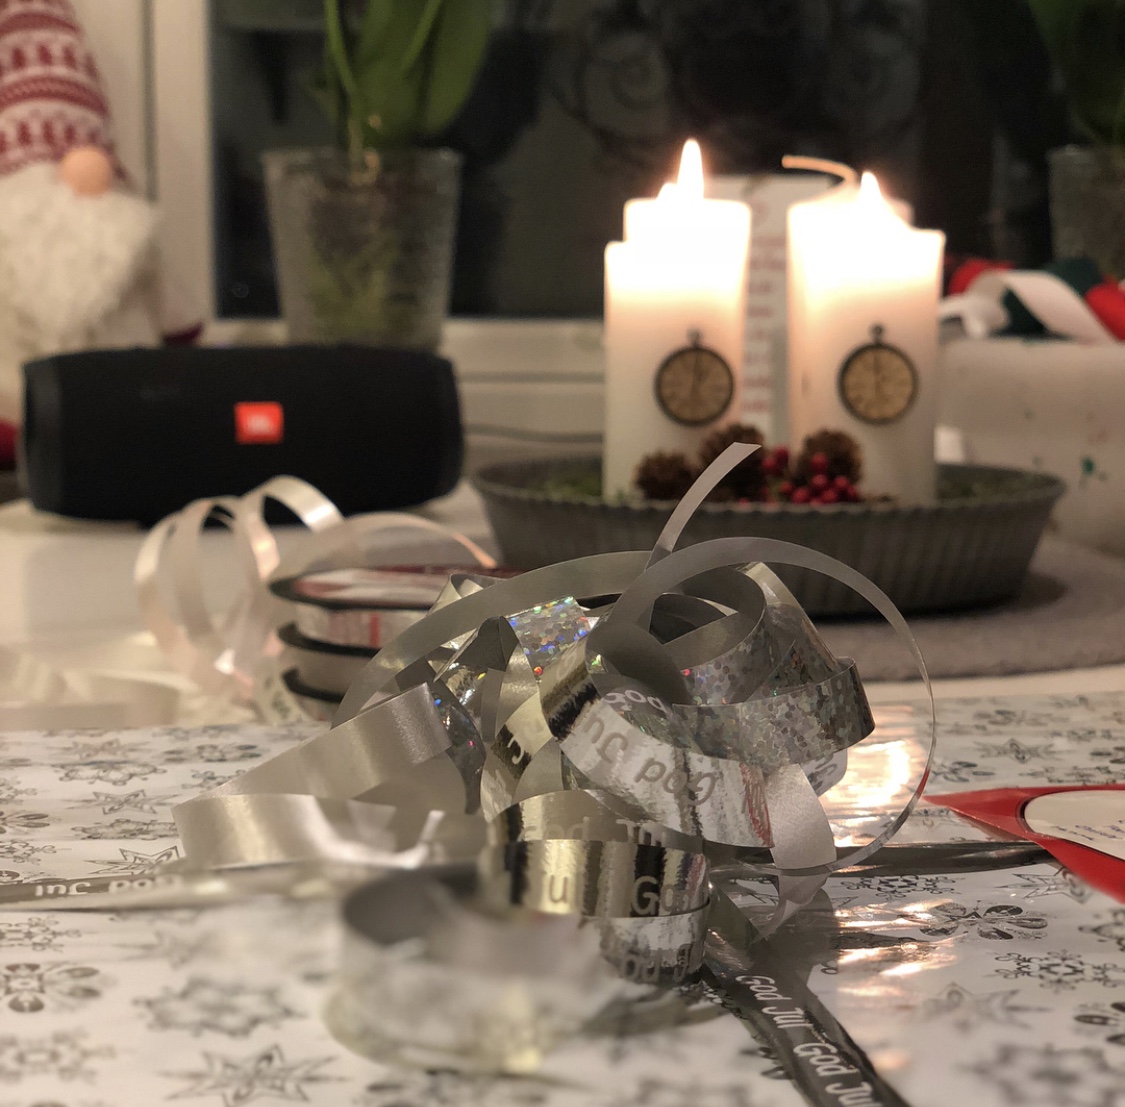 Juldekoration, ljus och en liten tomte